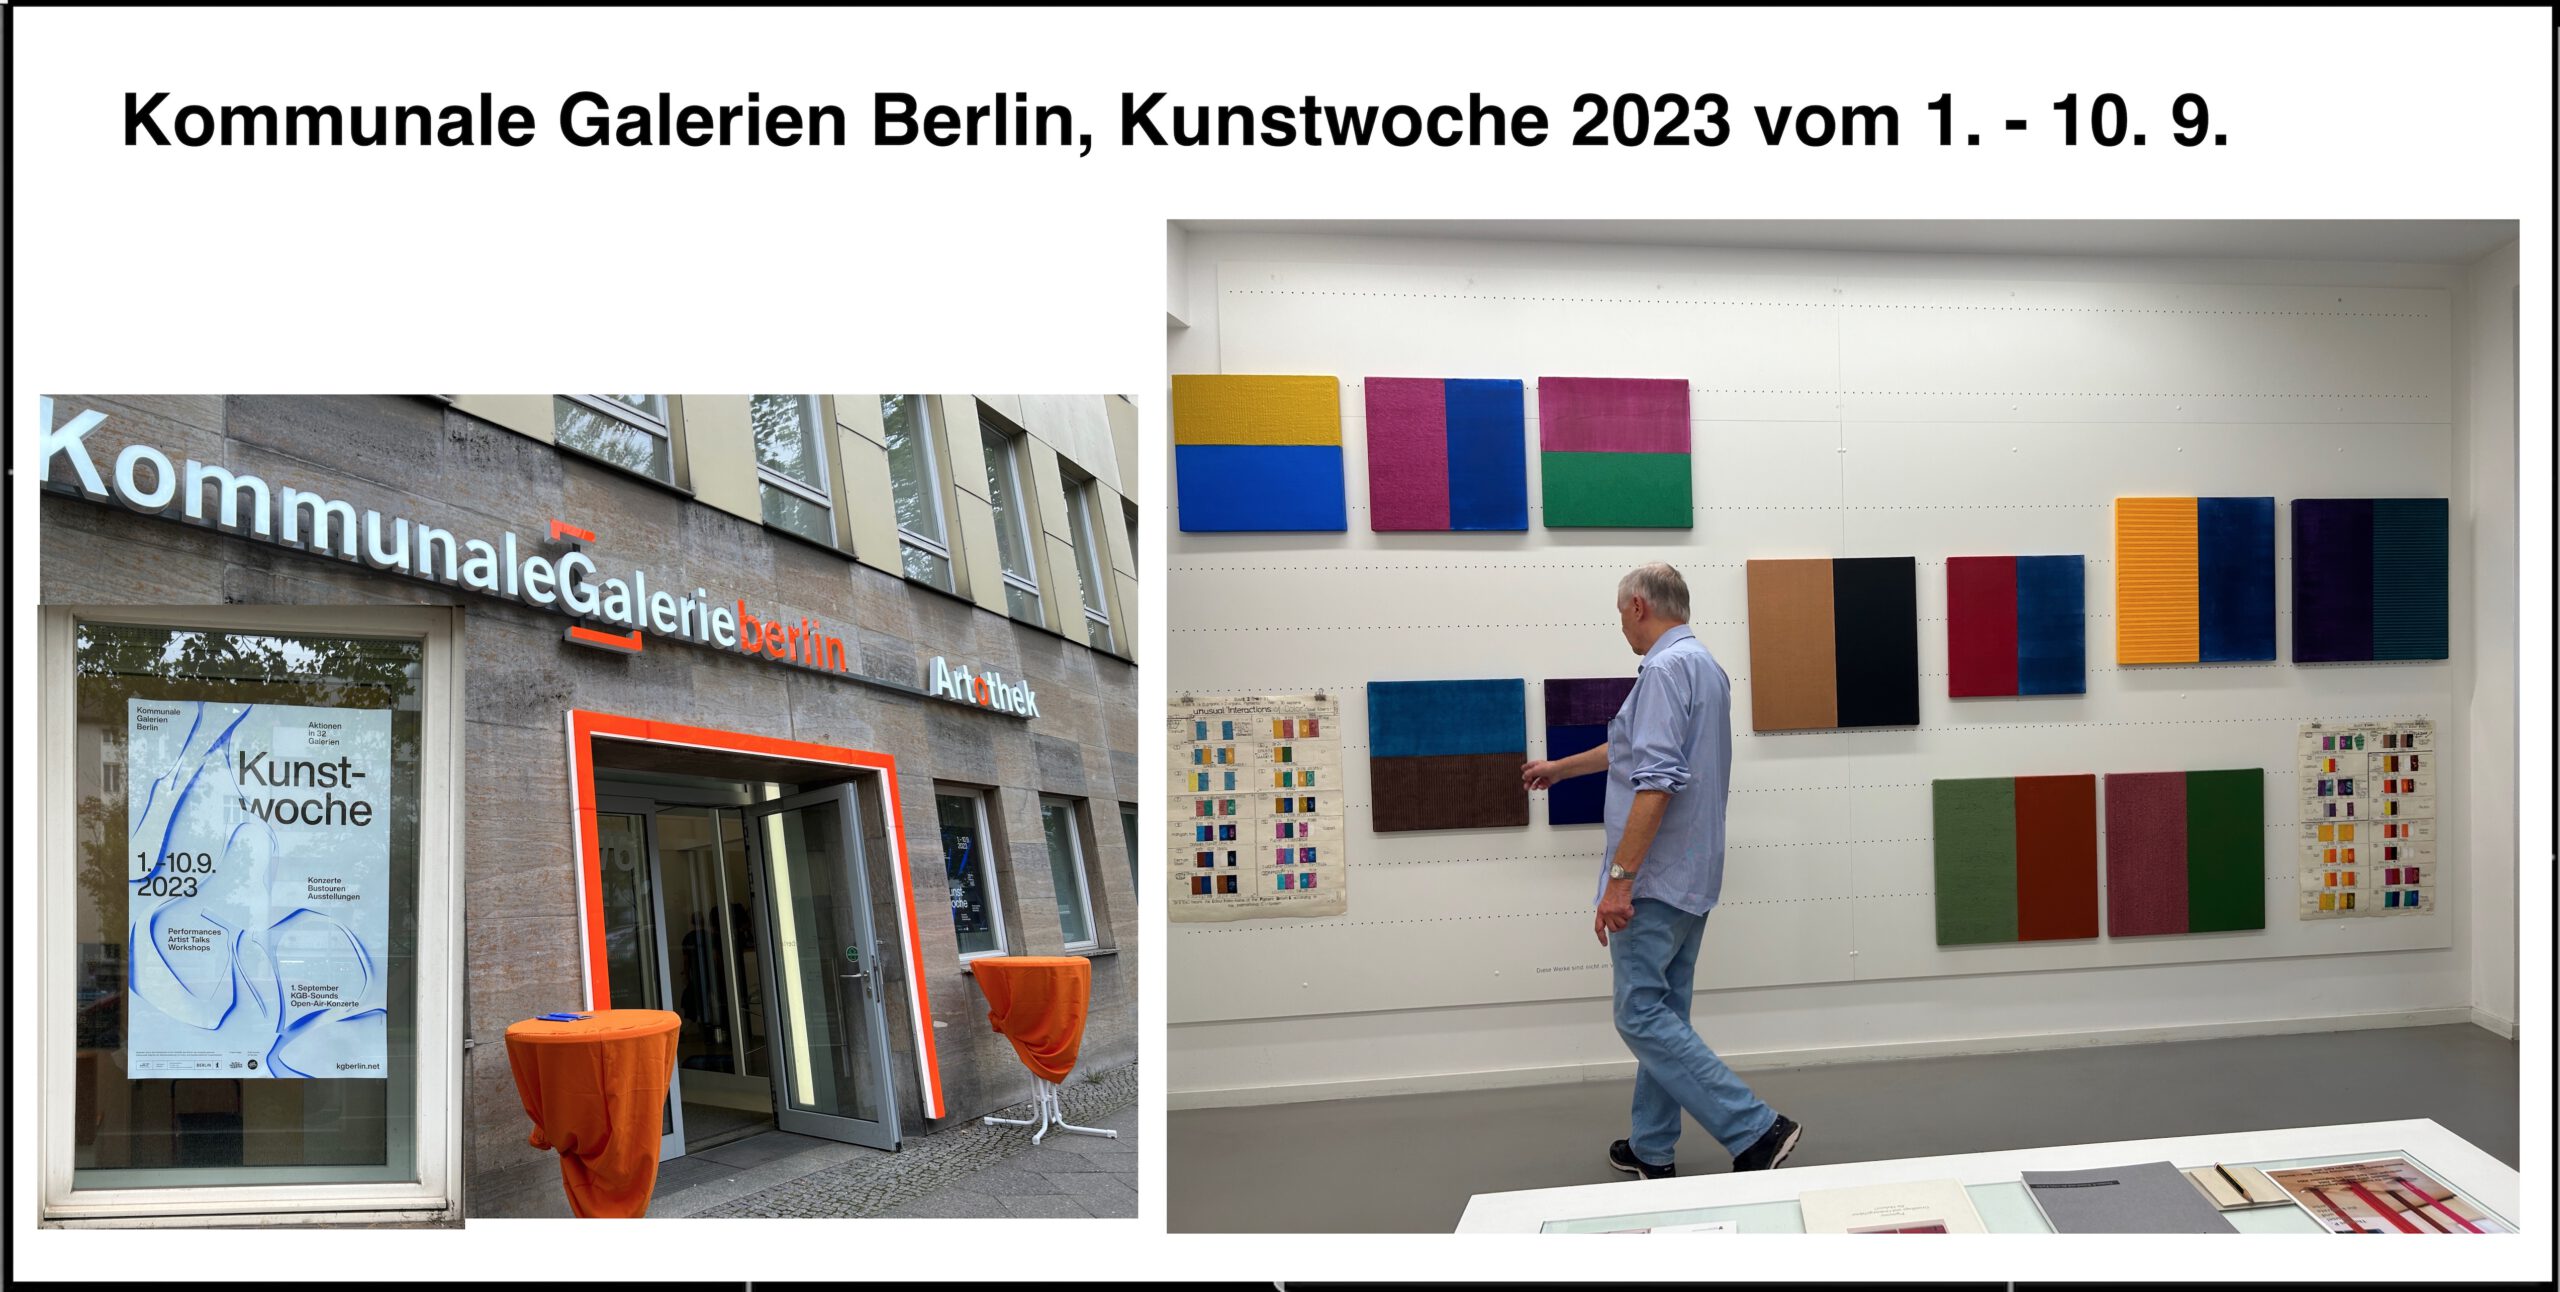 Kunstwoche der kommunalen Galerien 2023 in Berlin